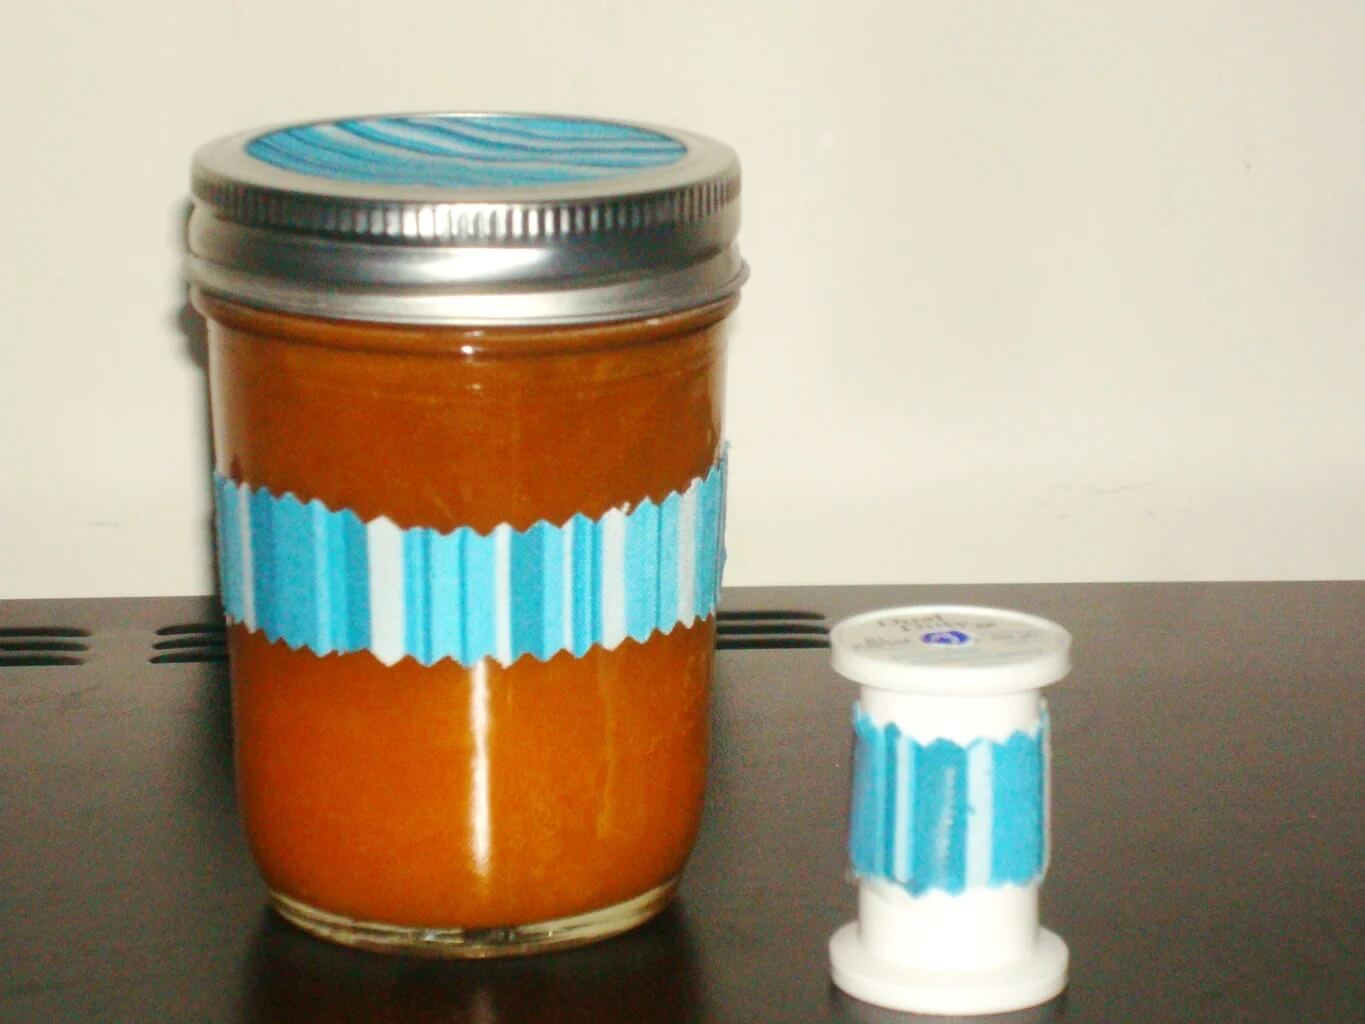 Easy To Make Washi Tape Craft Using Mason Jar Decorative Mason Jar Washi Tape Crafts